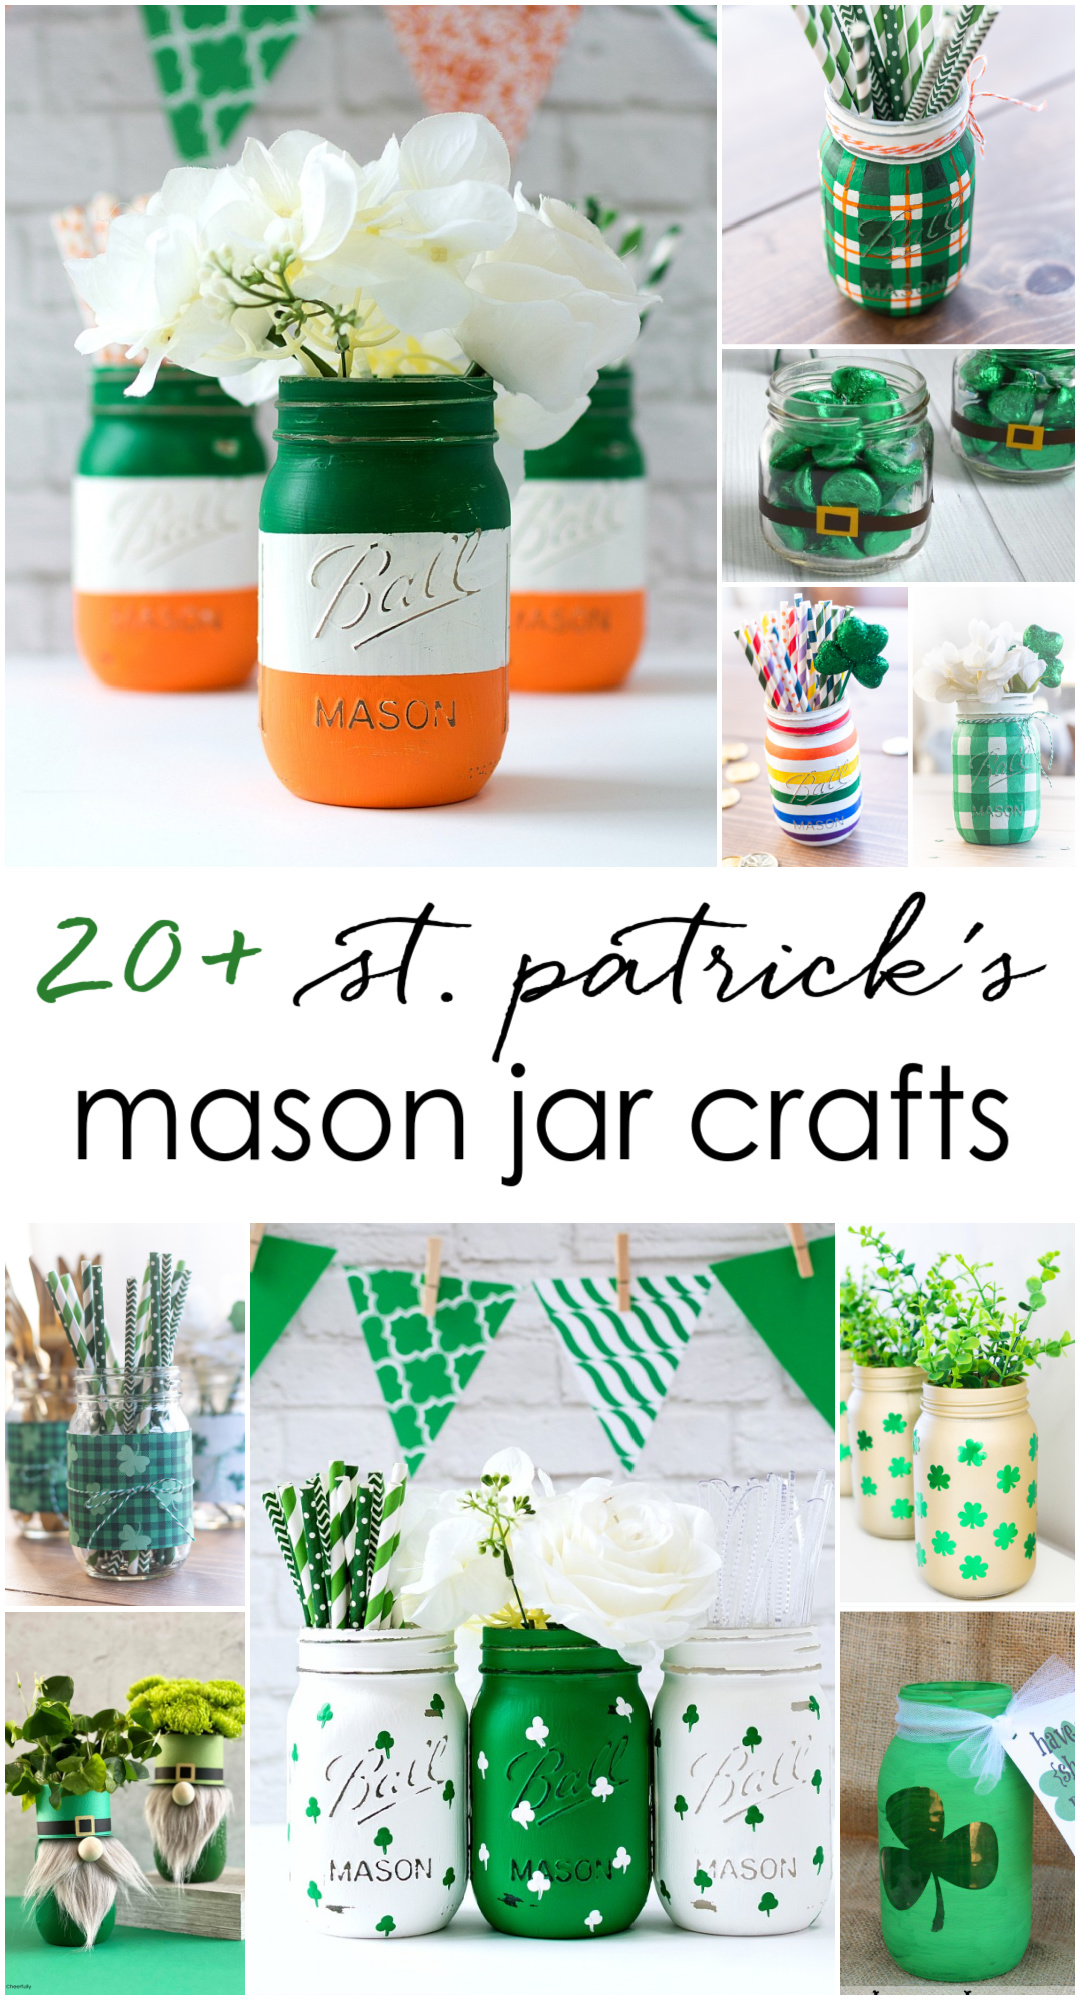 St. Patrick's Day Craft Ideas - Mason Jar Crafts for St. Patrick's Day - Shamrock Crafts with Mason Jars - Mason Jar Crafts